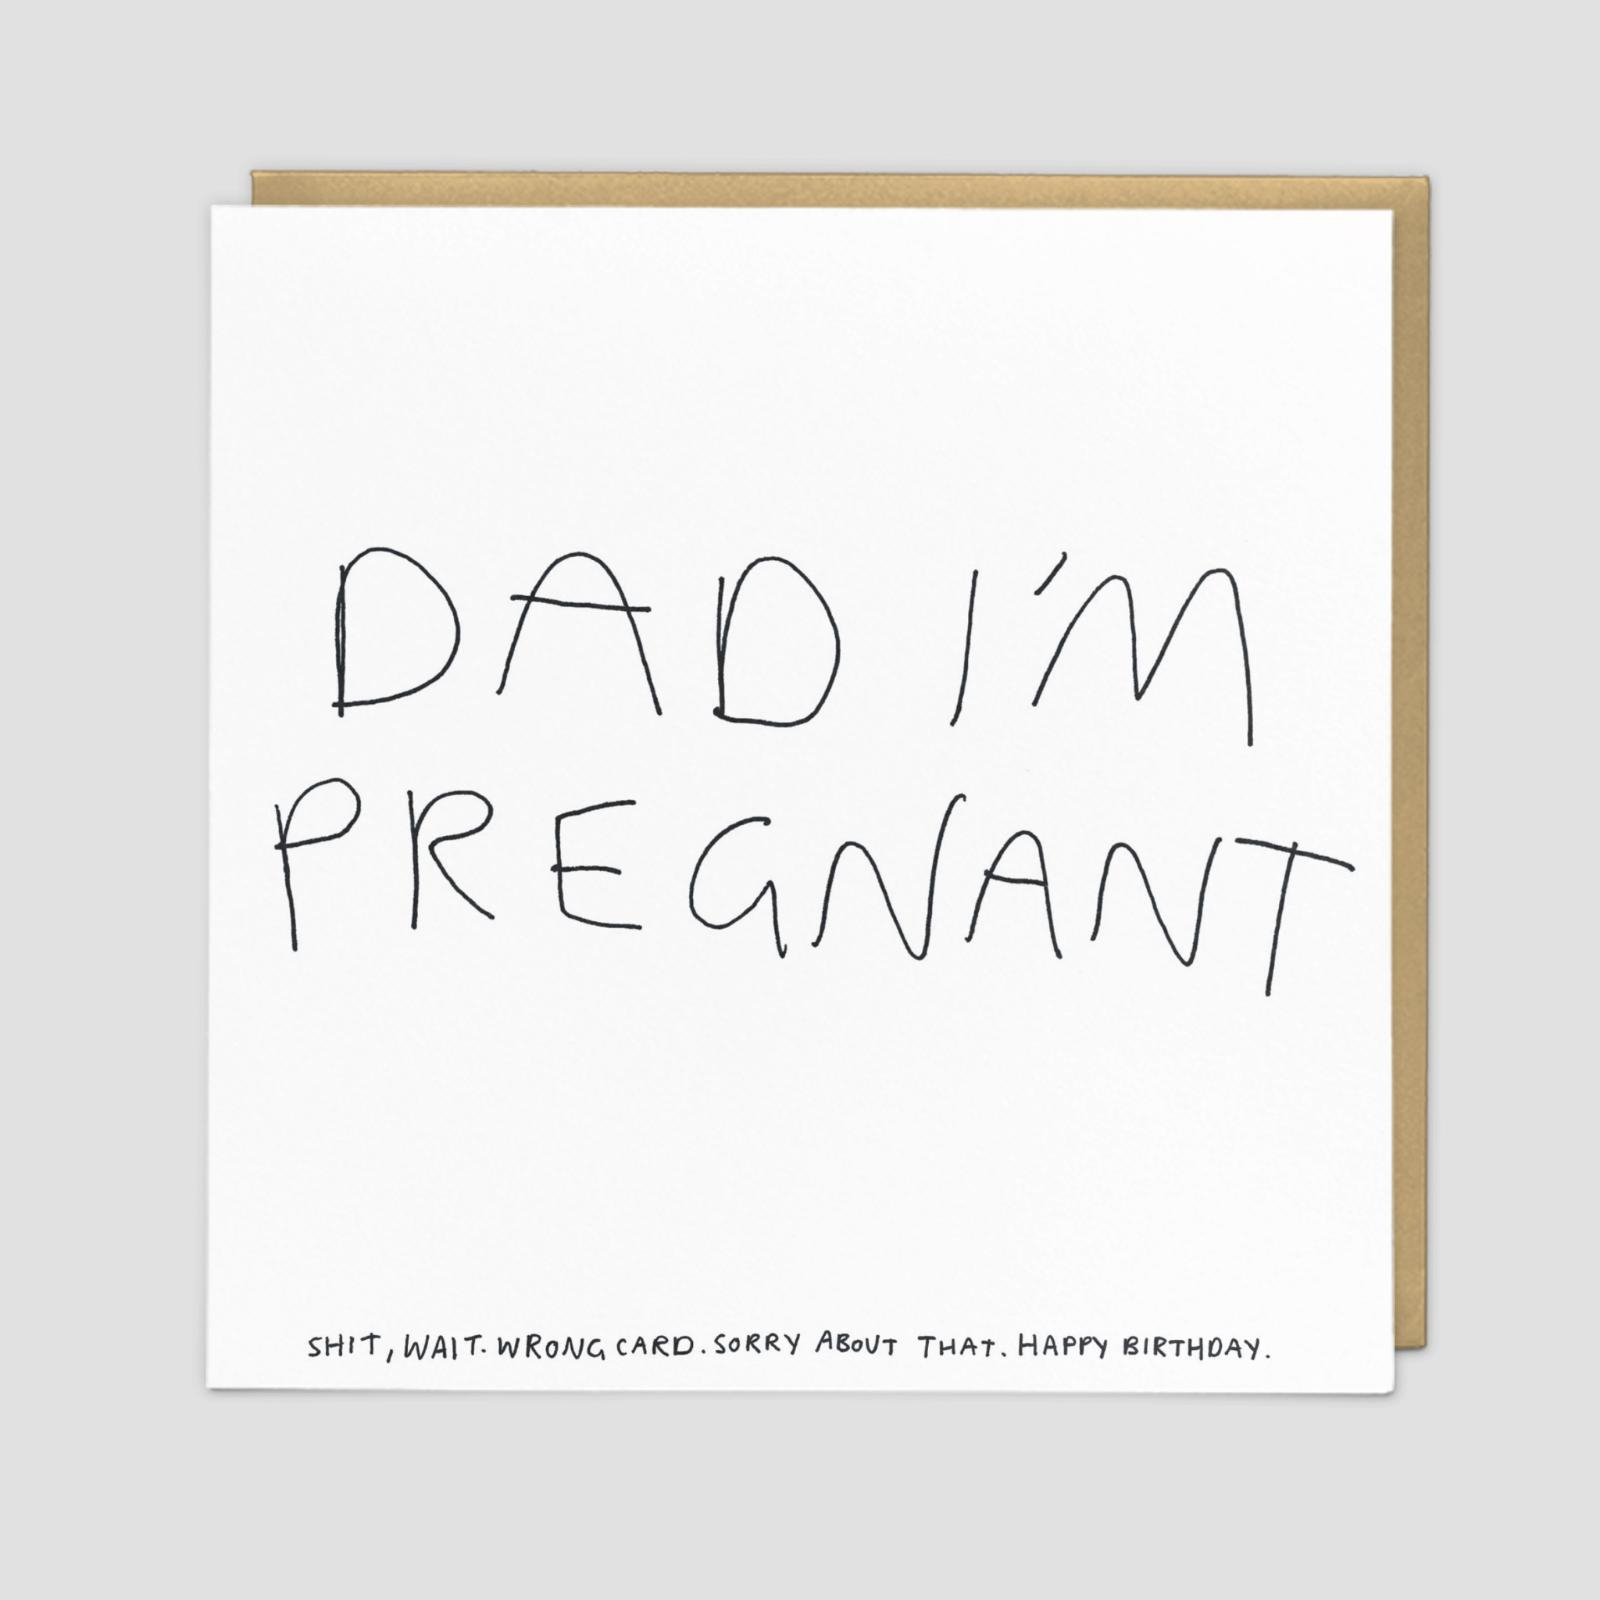 Cute Birthday Card Ideas For Dad Dad Im Pregnant Good Things Range Humorous Dad Birthday Card